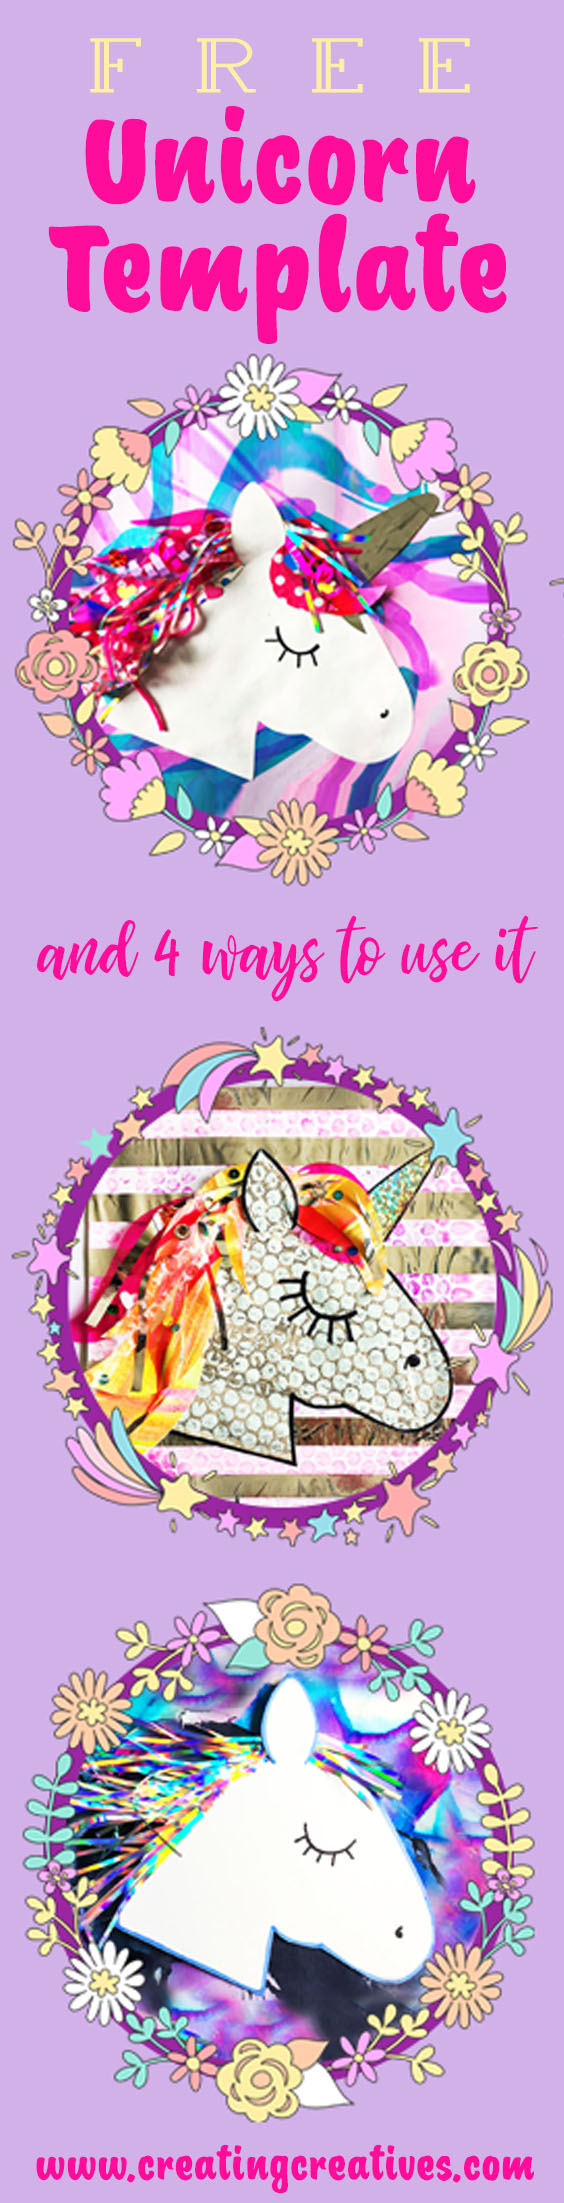 FREE Unicorn Printable | Fun Unicorn Craft For Kids | #unicornprintable #unicorncraft #unicornparty